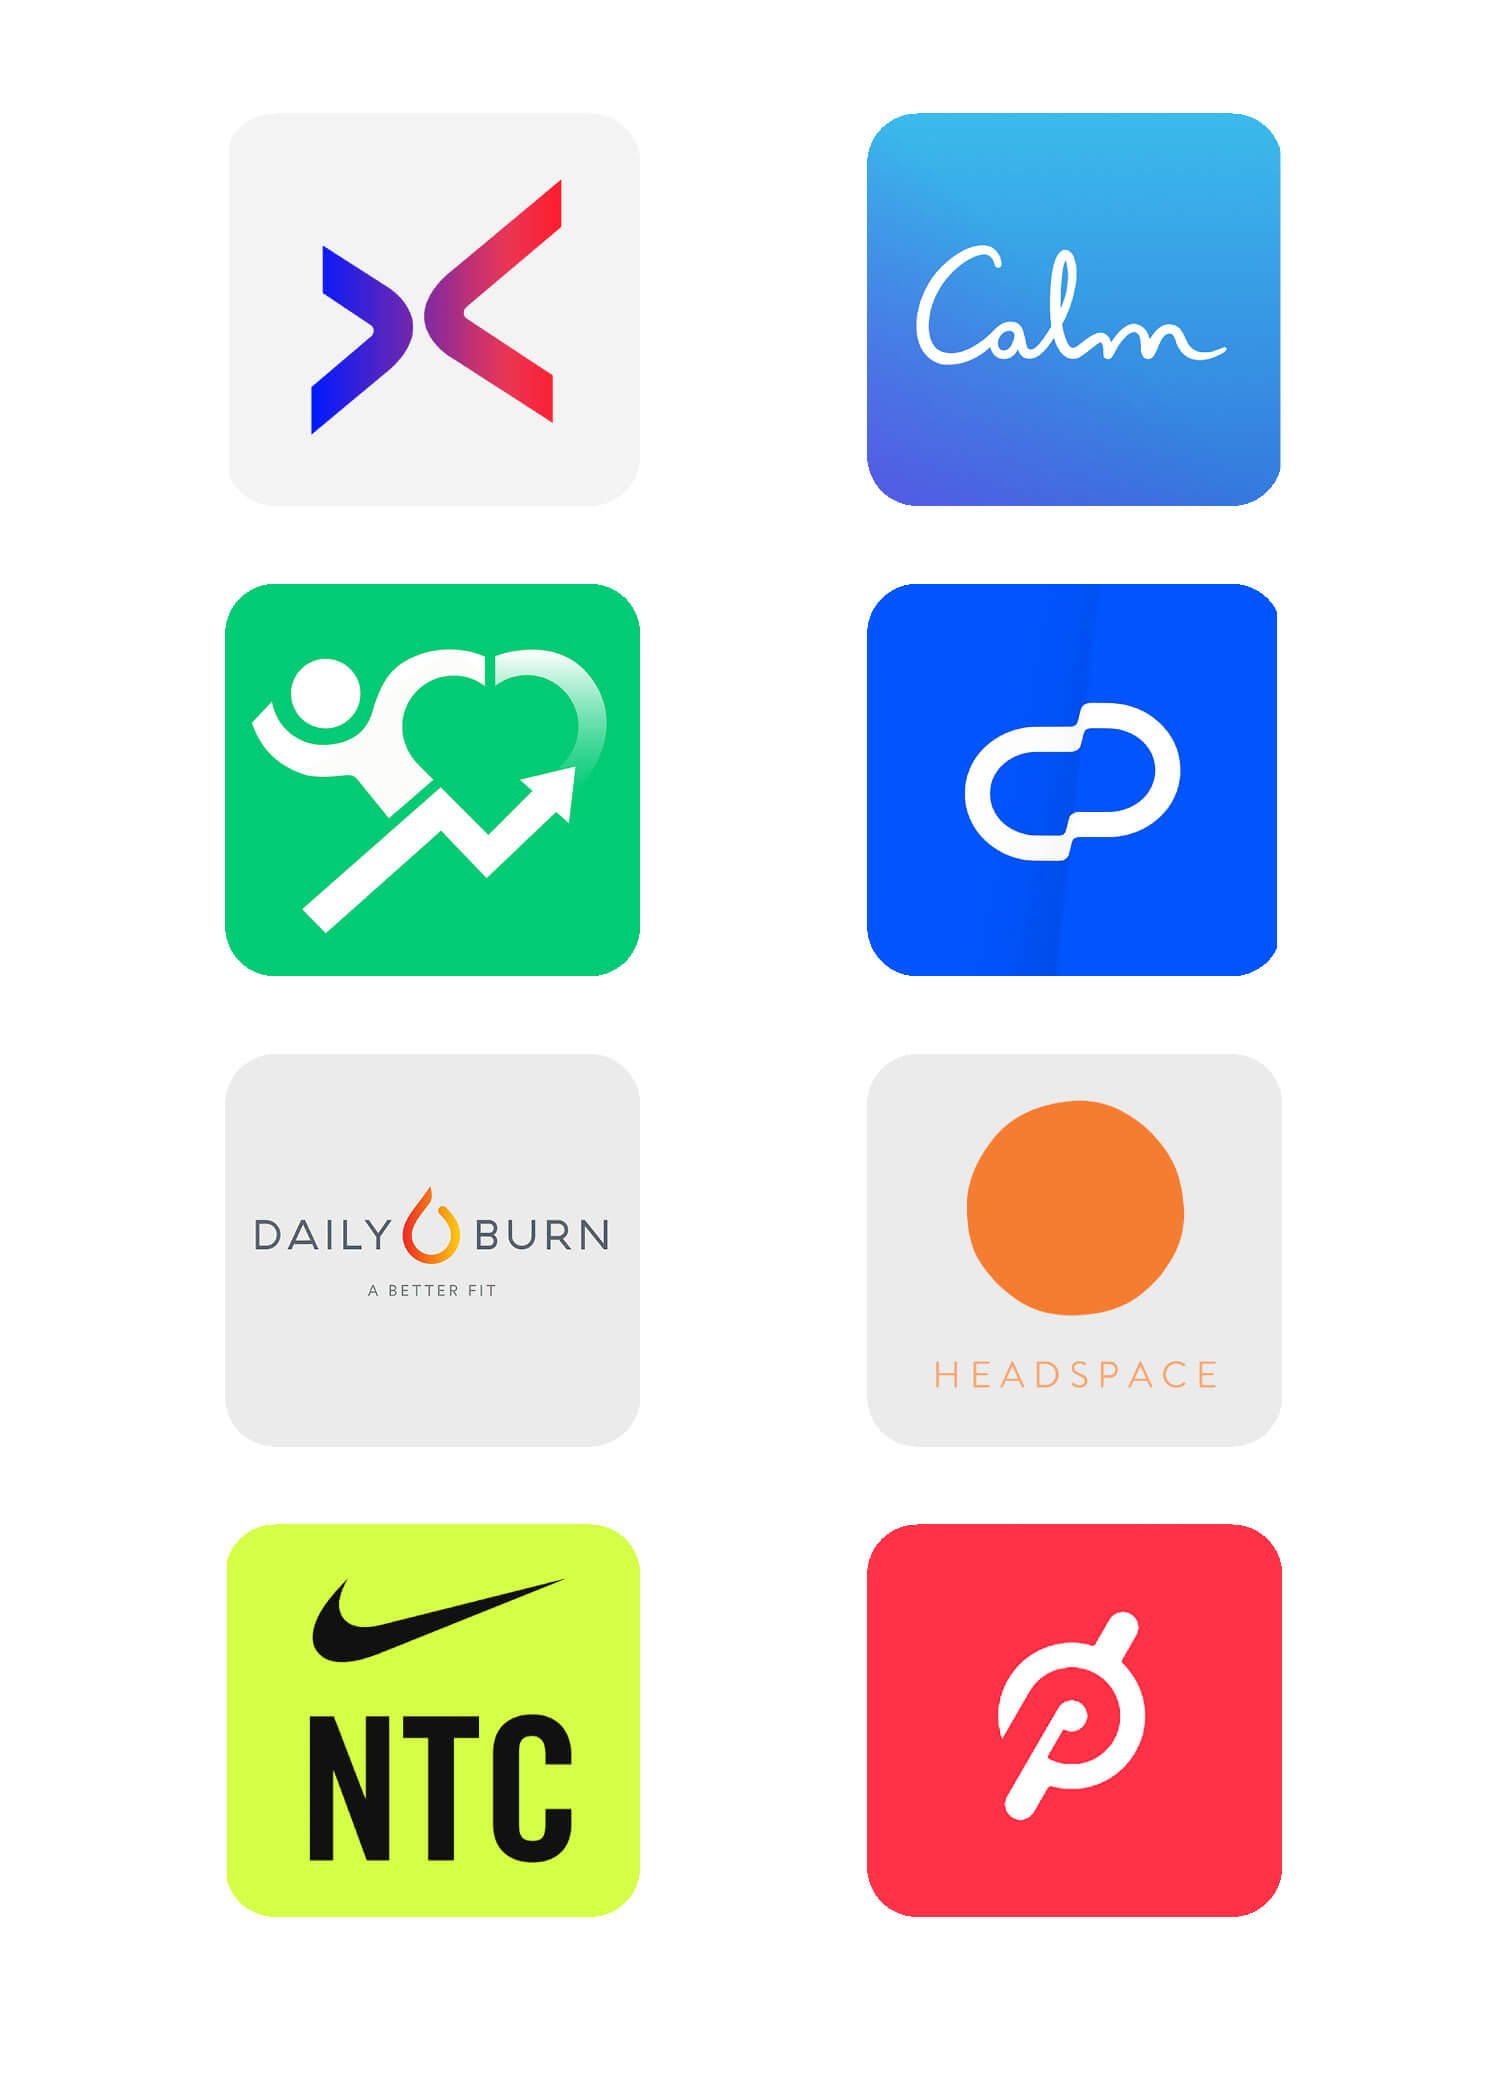 App logos